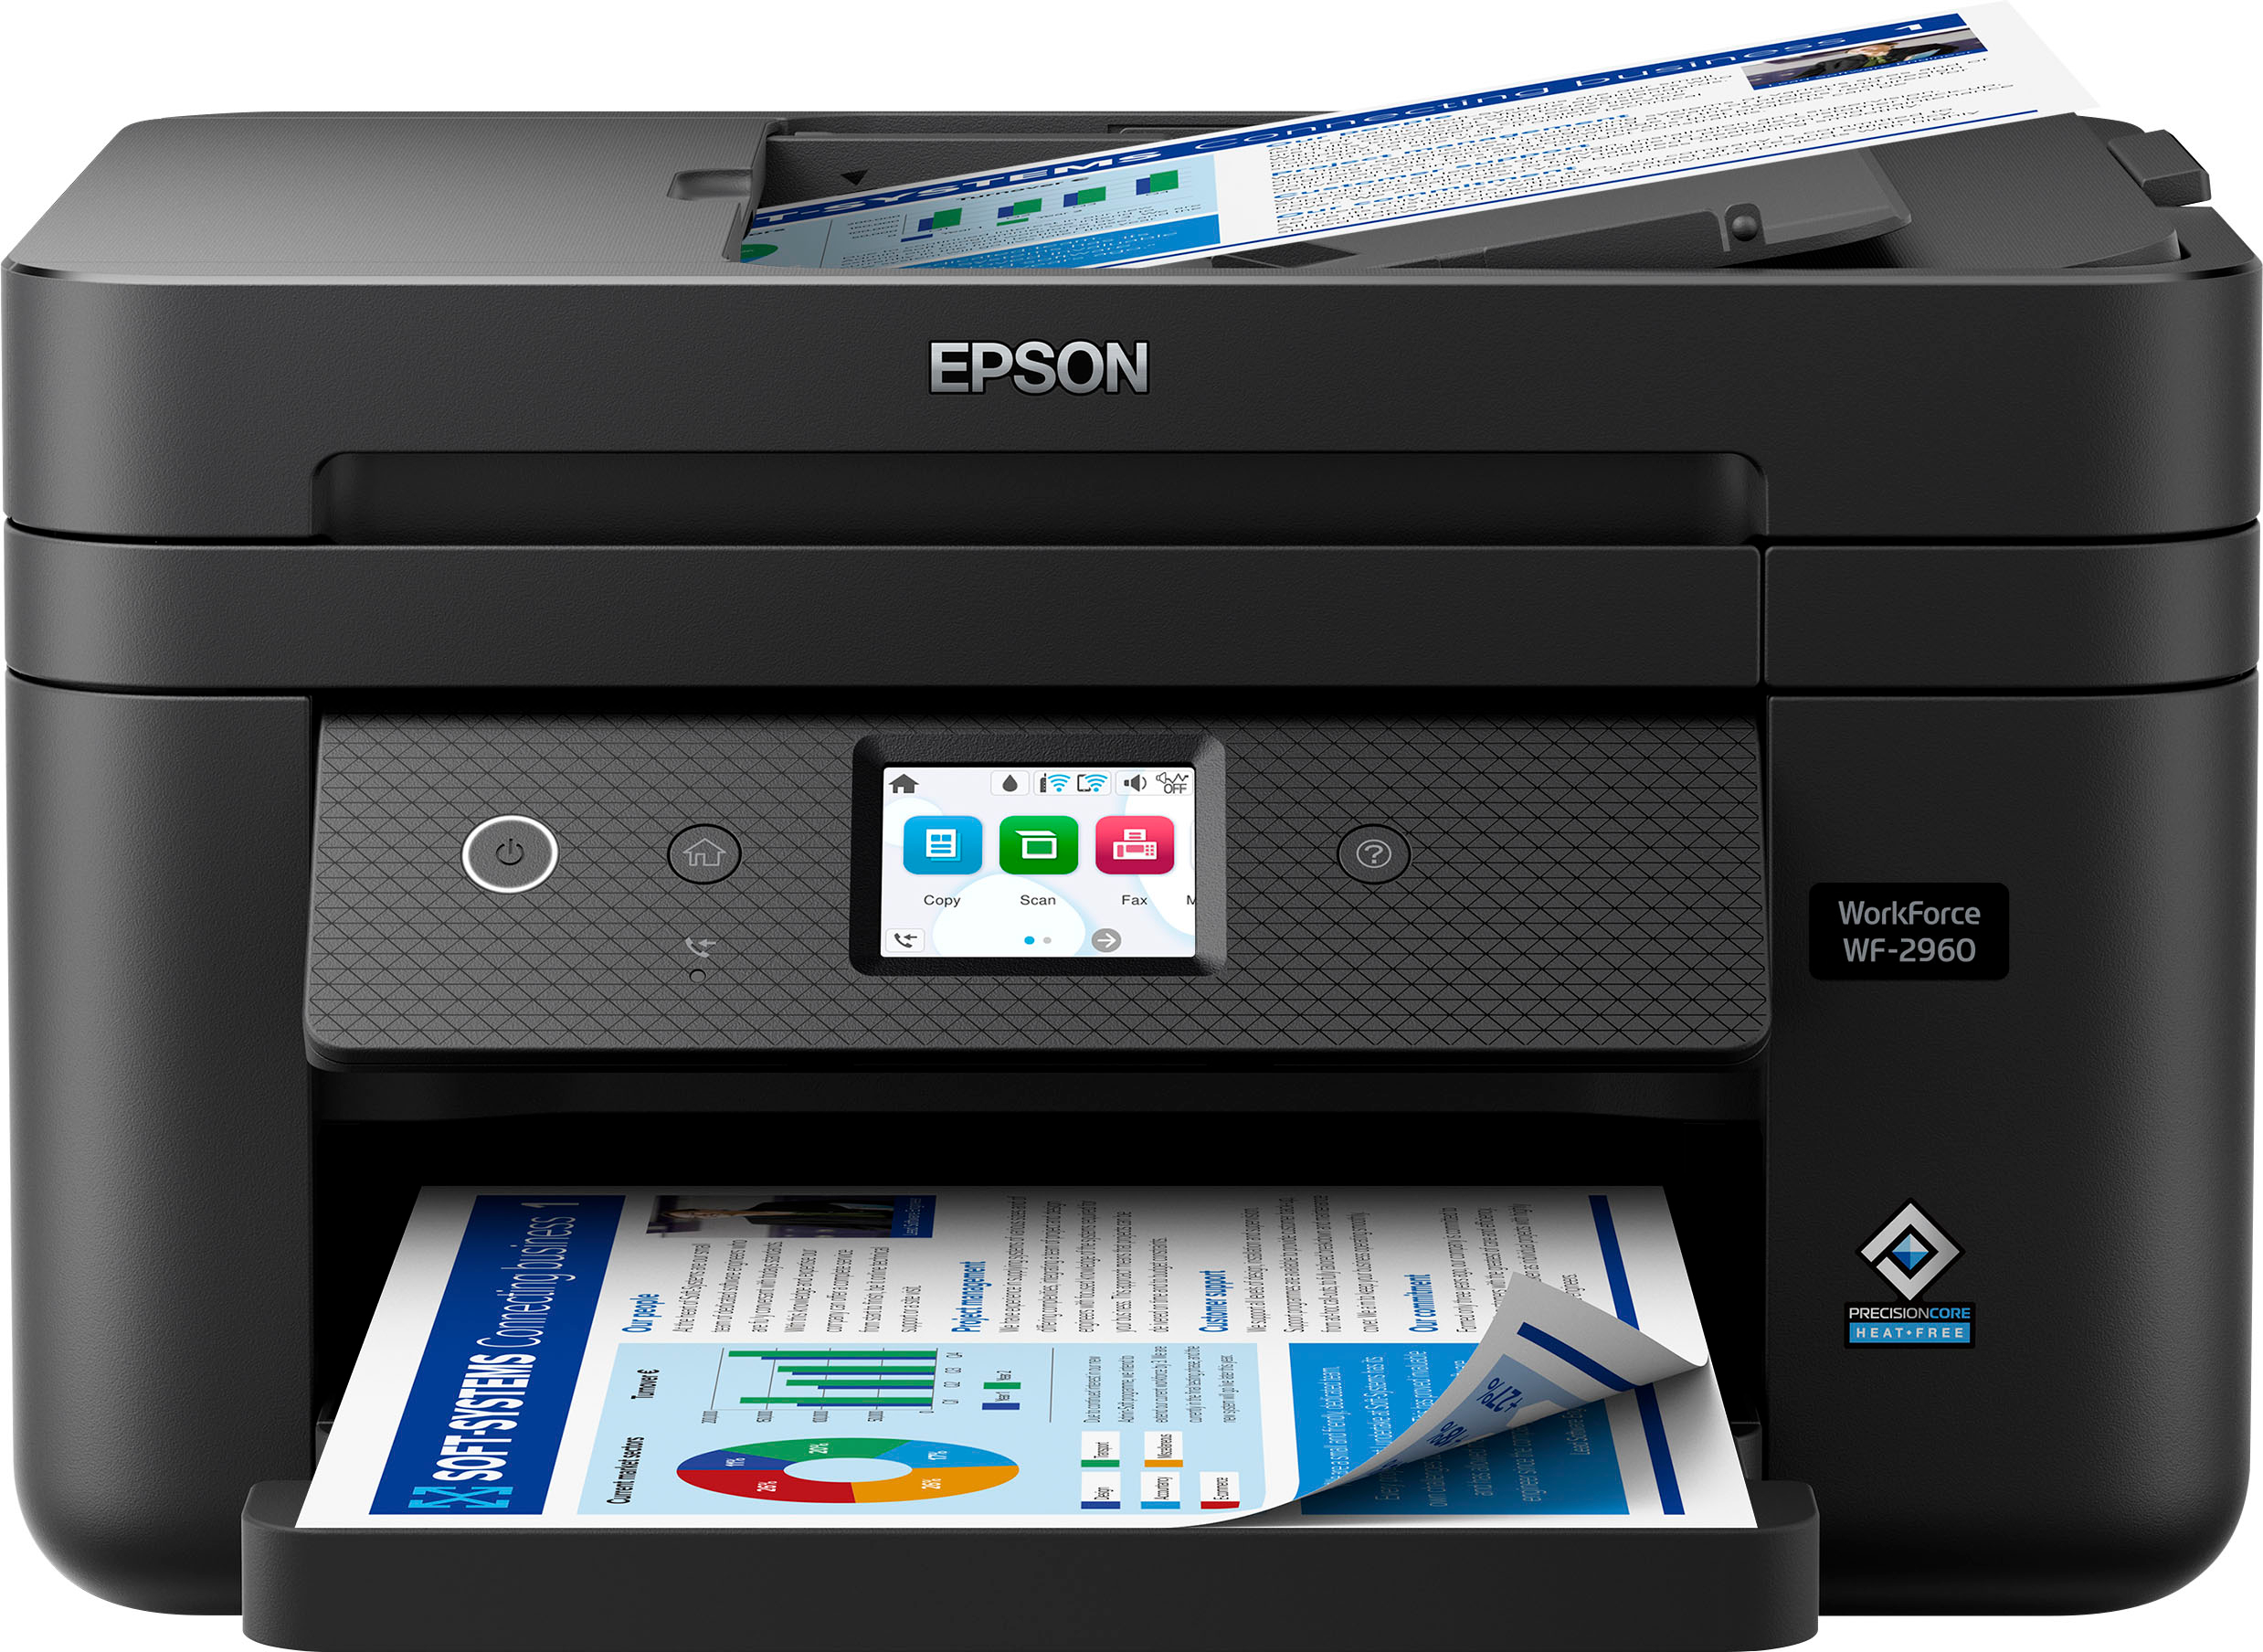 Epson WorkForce WF-2860 Inkjet All-In-One Printer